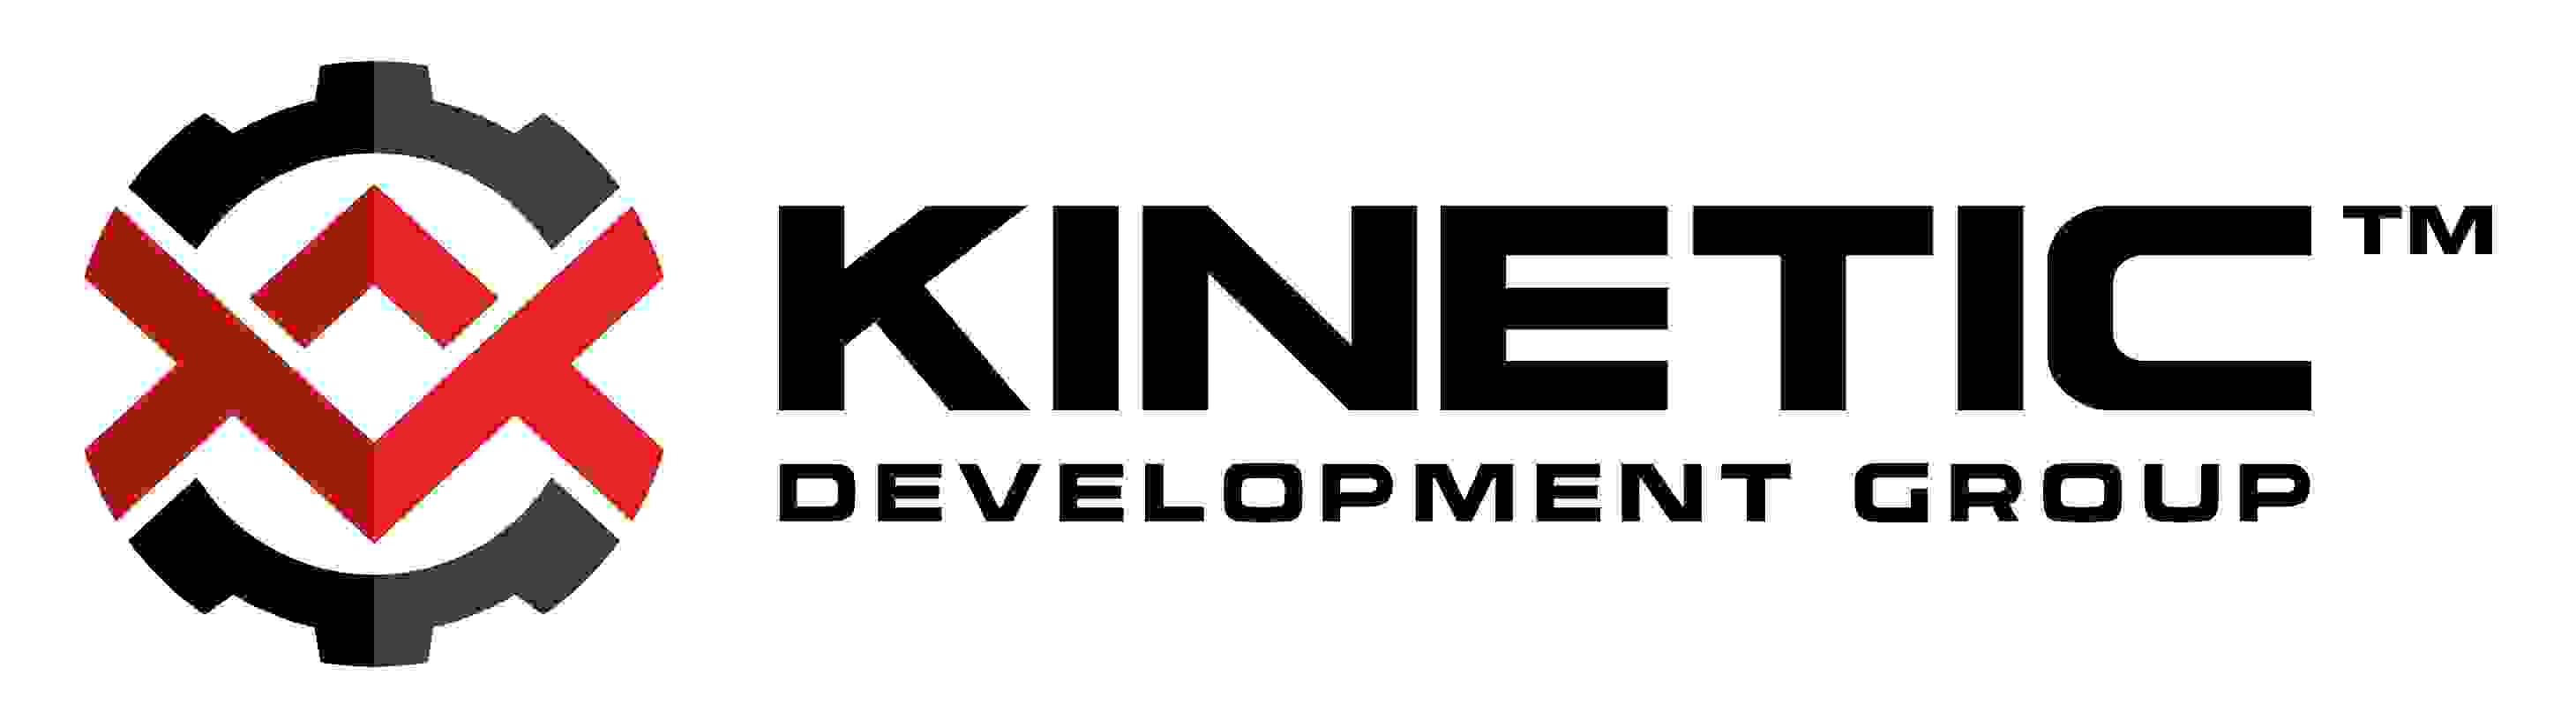 KINETIC DEVELOPMENT GROUP LLC Products